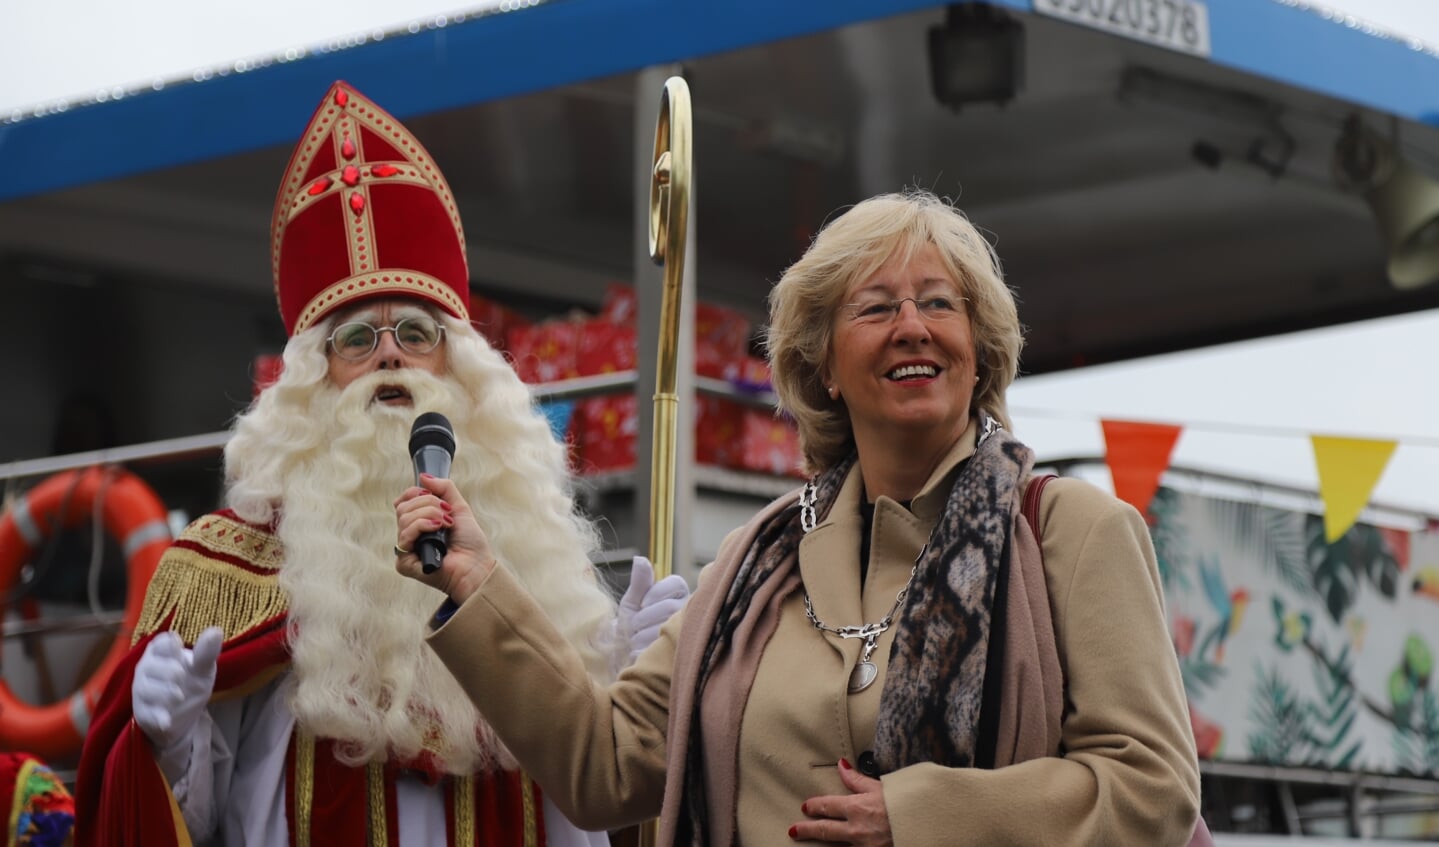 Burgemeester Driessen verwelkomde Sinterklaas.  